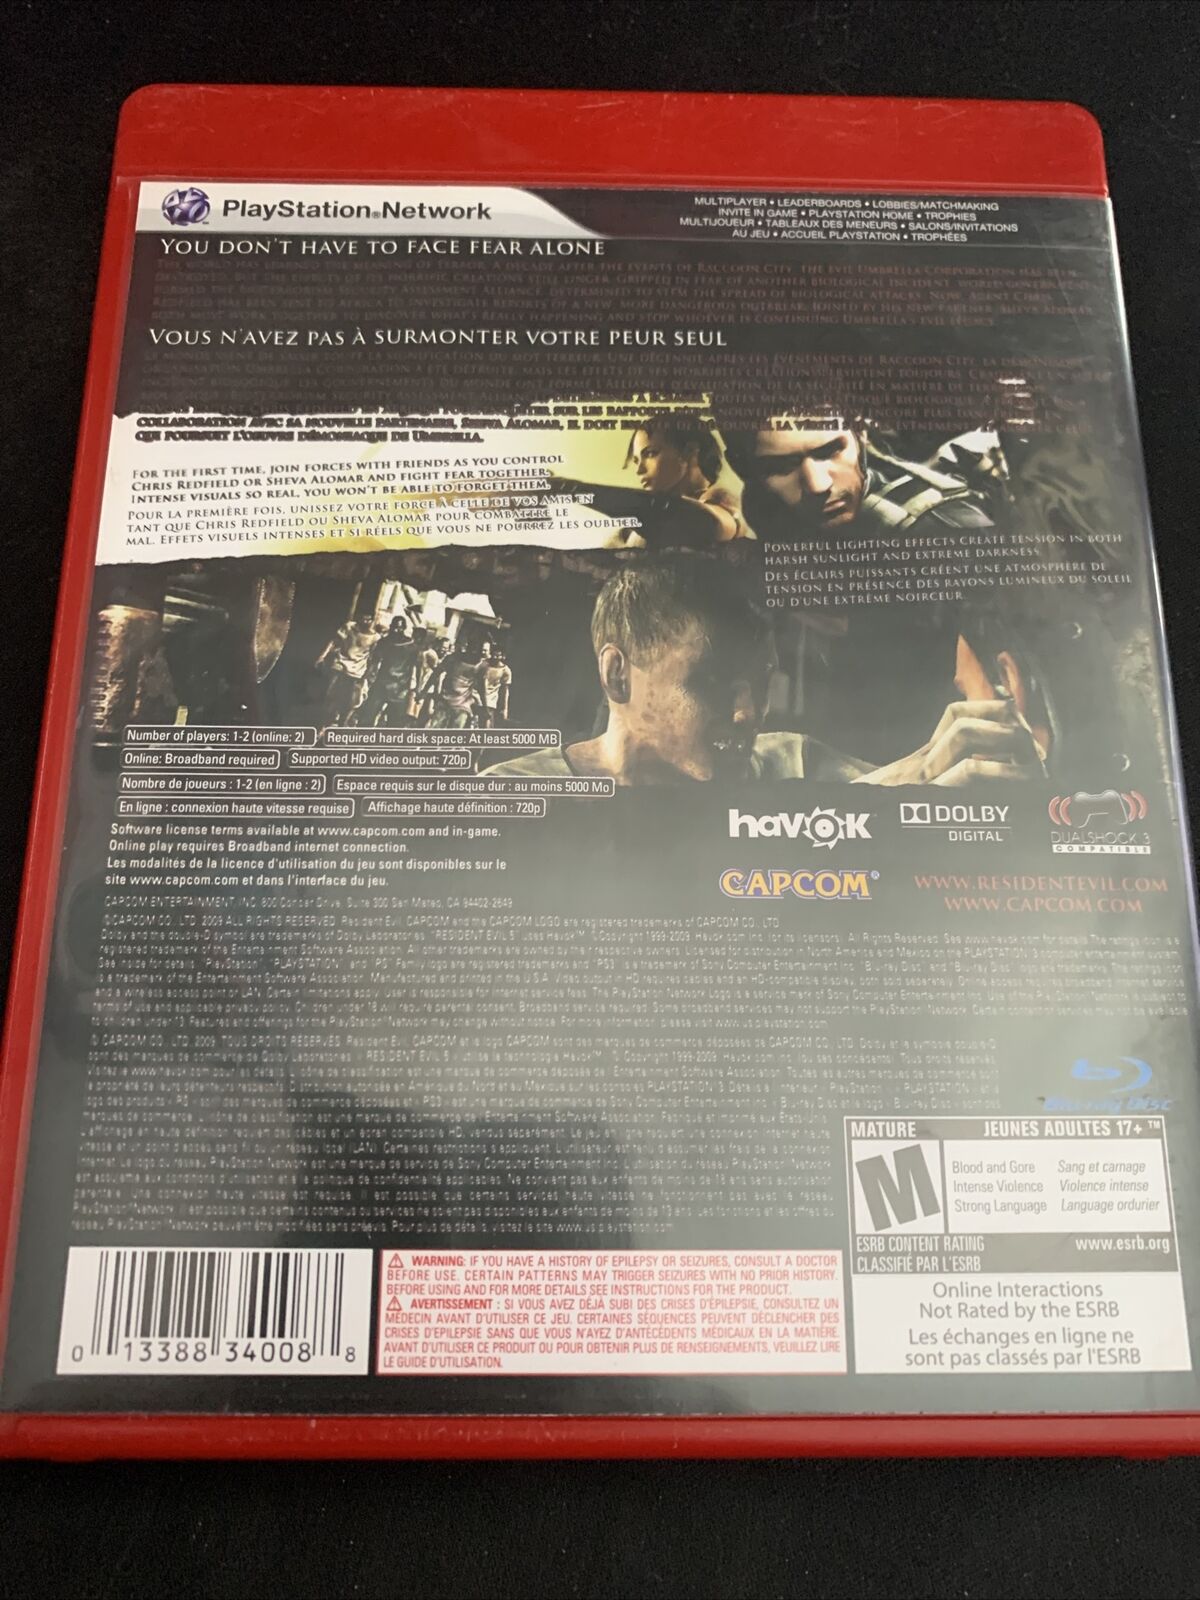 Resident Evil 5 (Sony PlayStation 3, 2009)